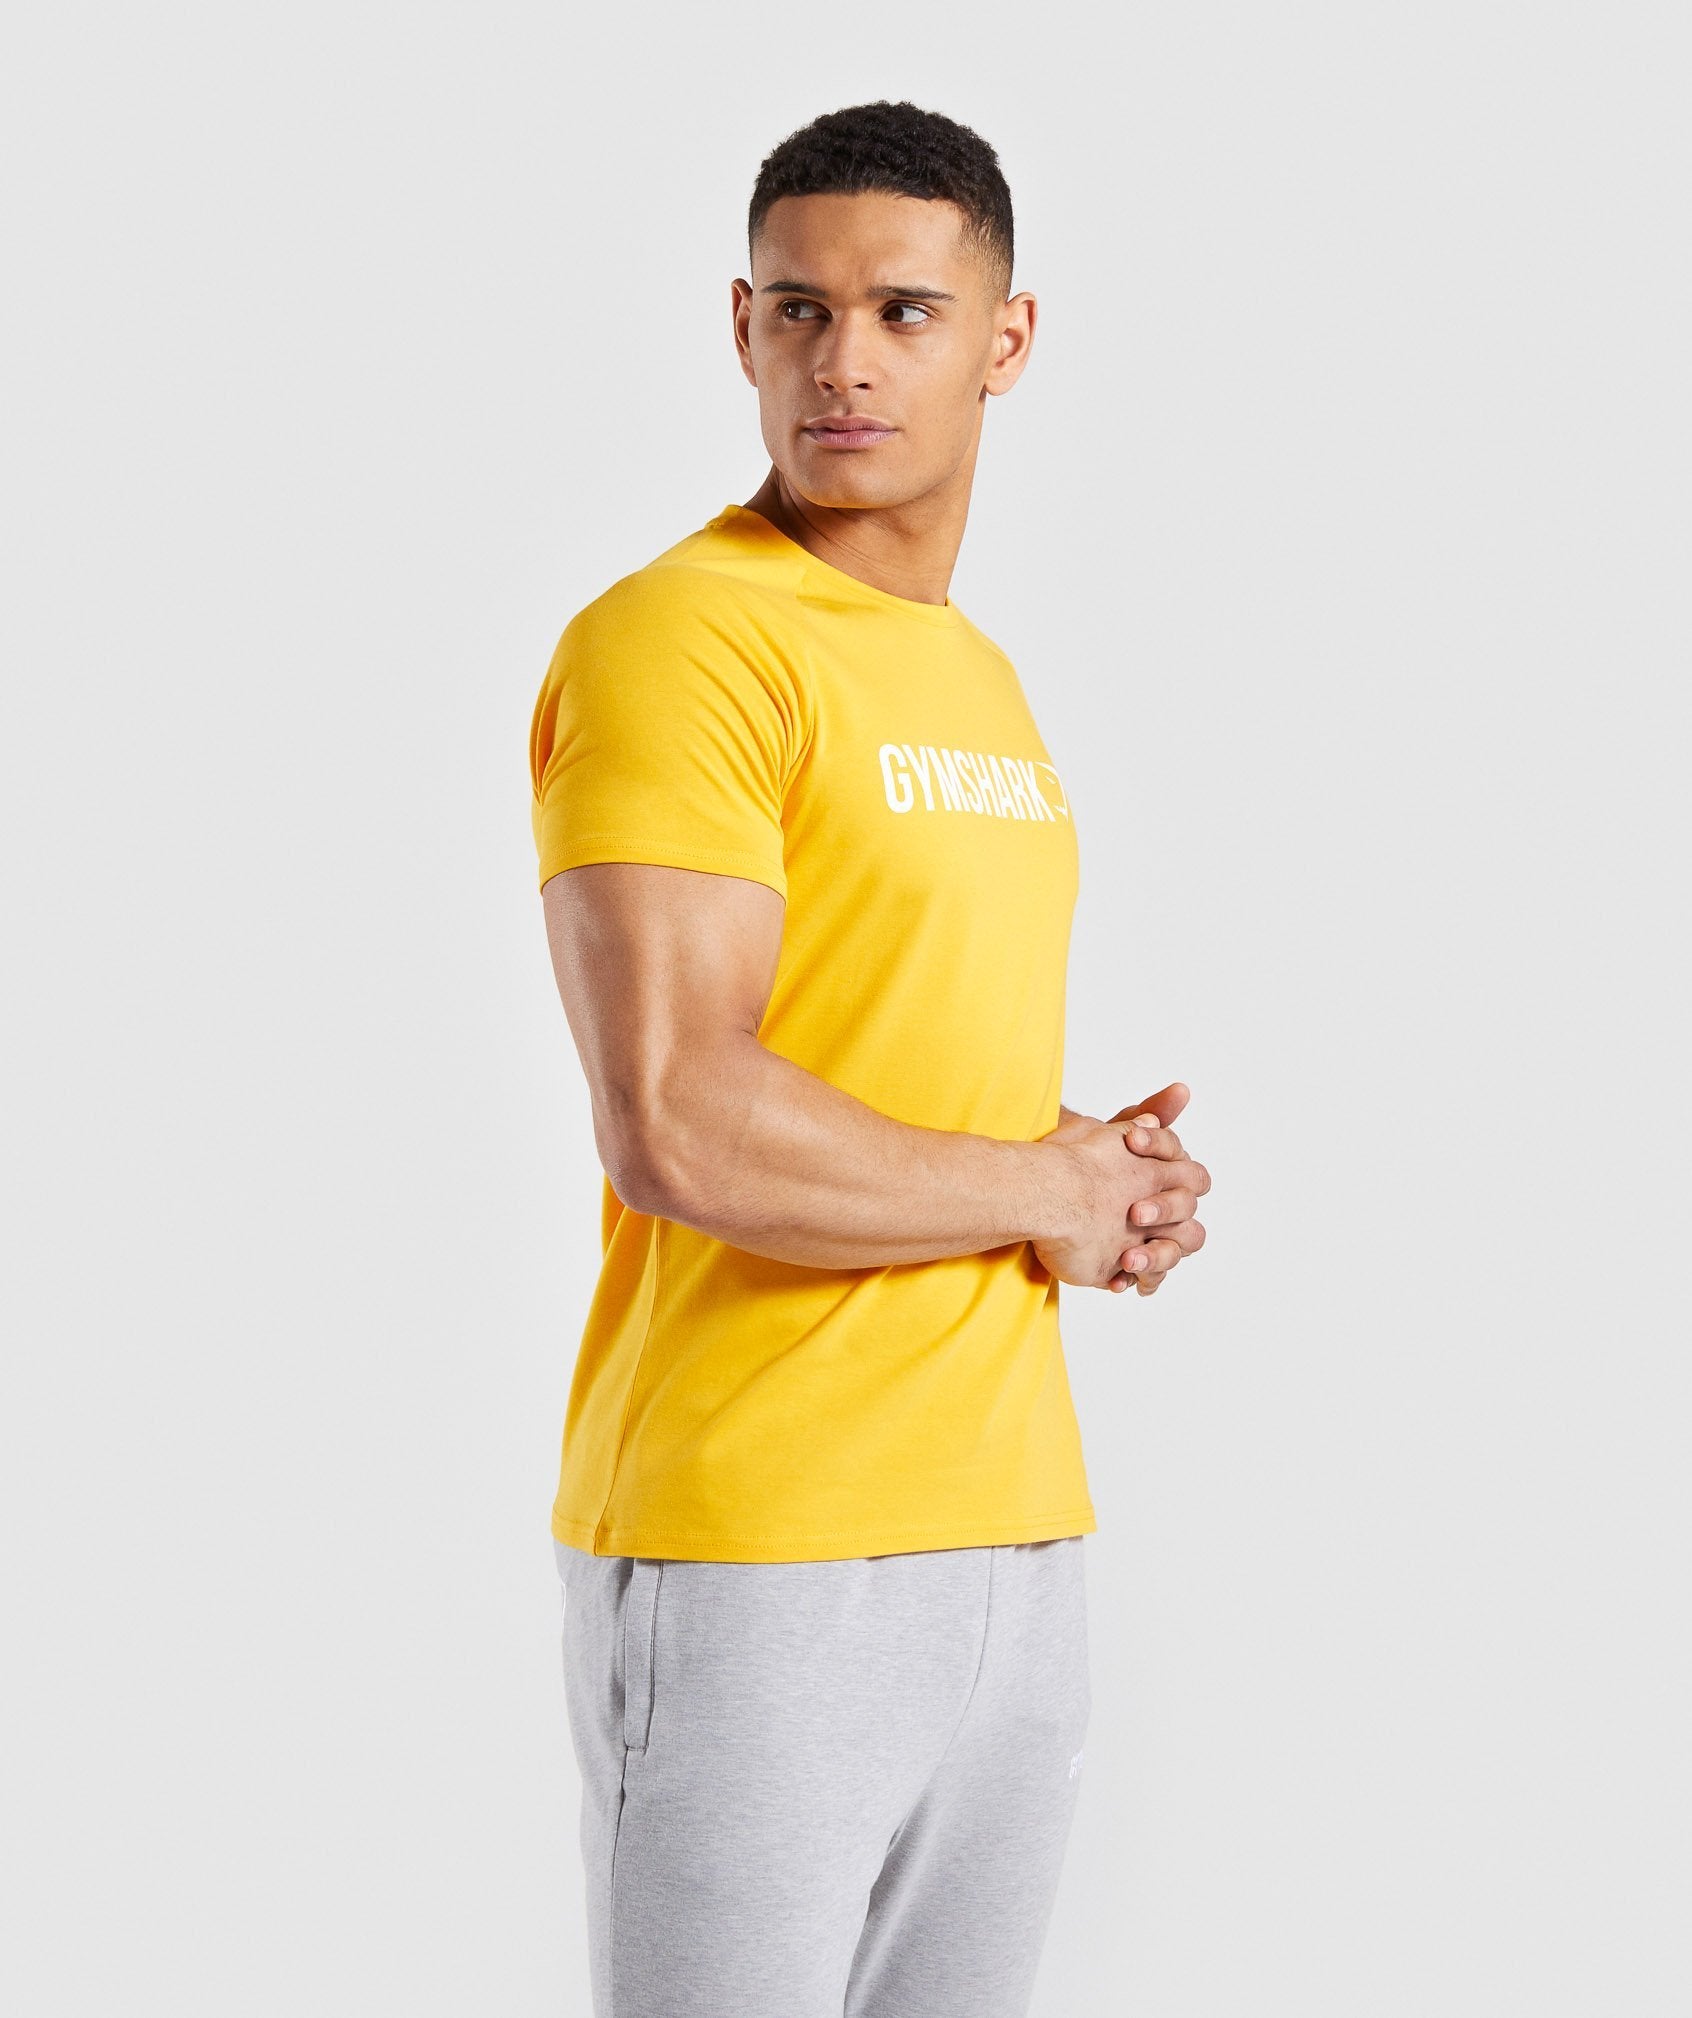 Apollo T-Shirt in Yellow - view 3